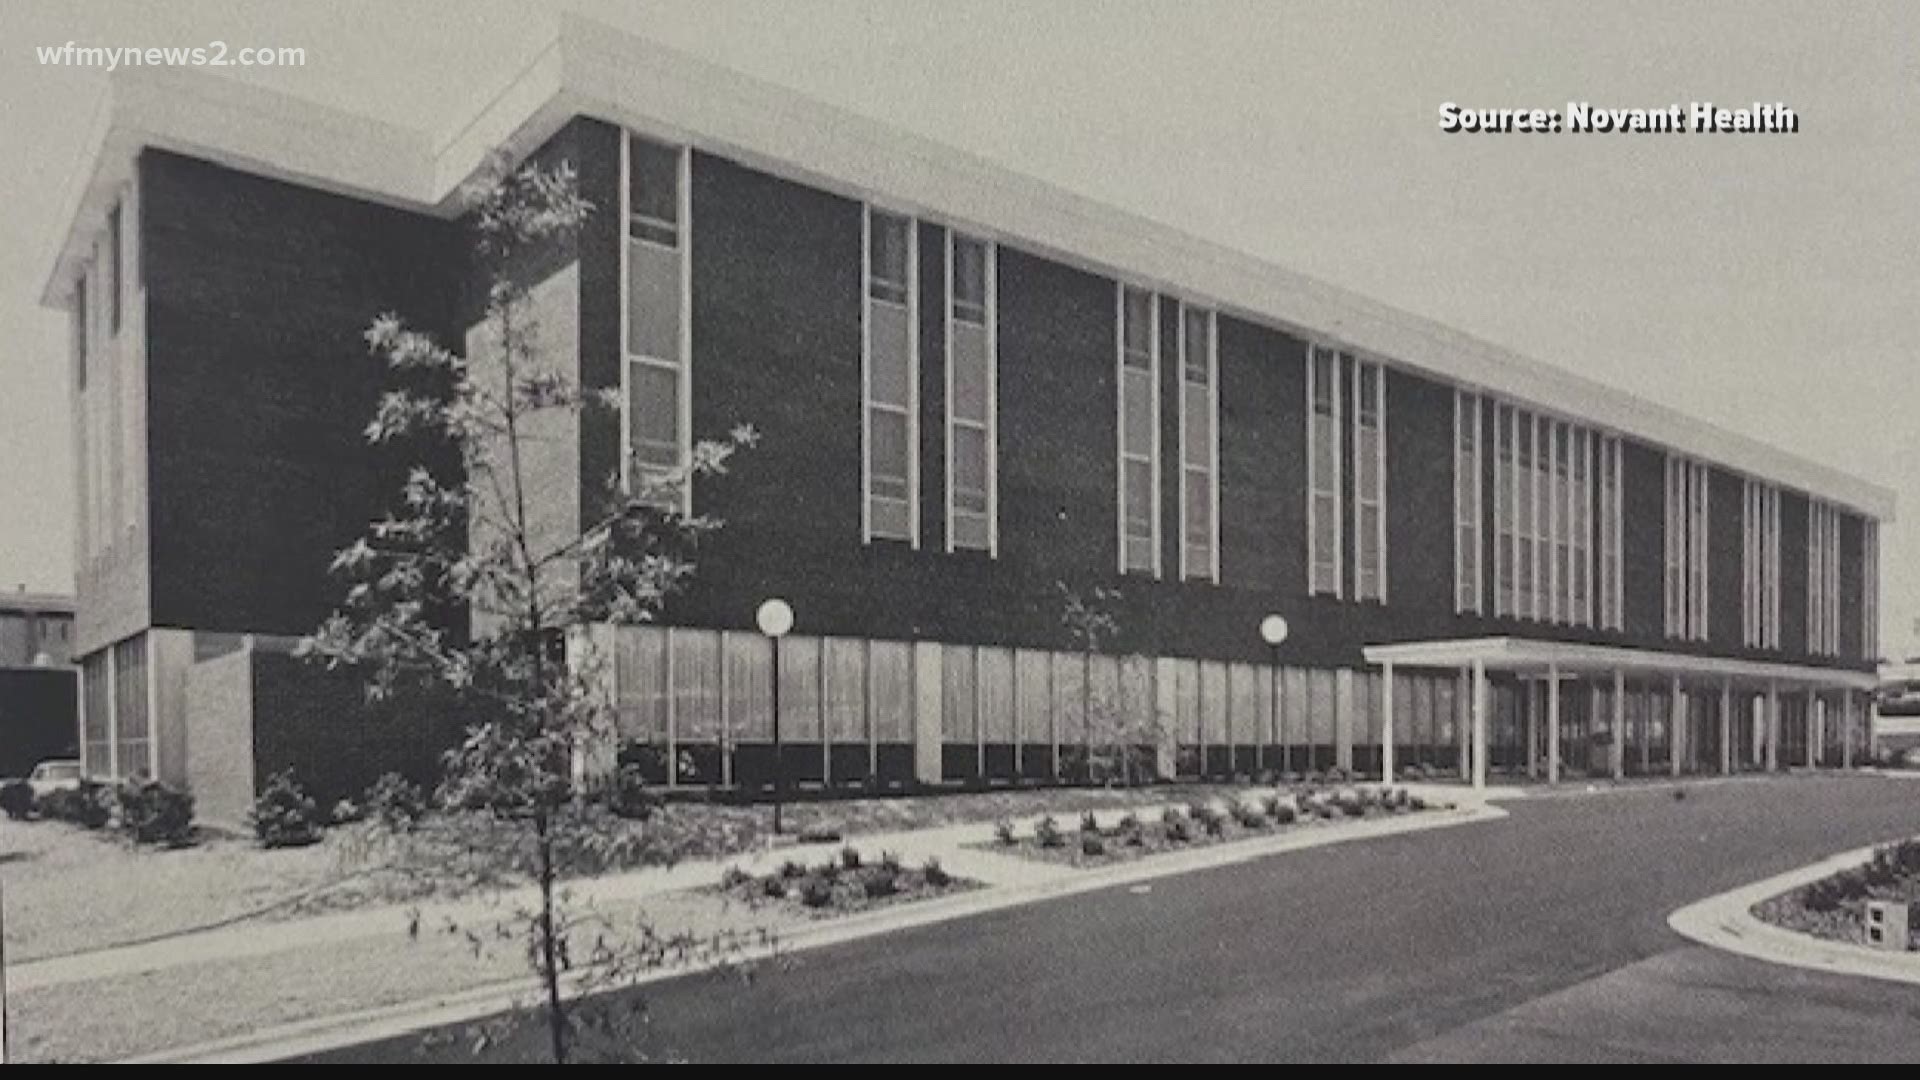 Novant Health Medical Park Hospital in Winston-Salem celebrates 50 years